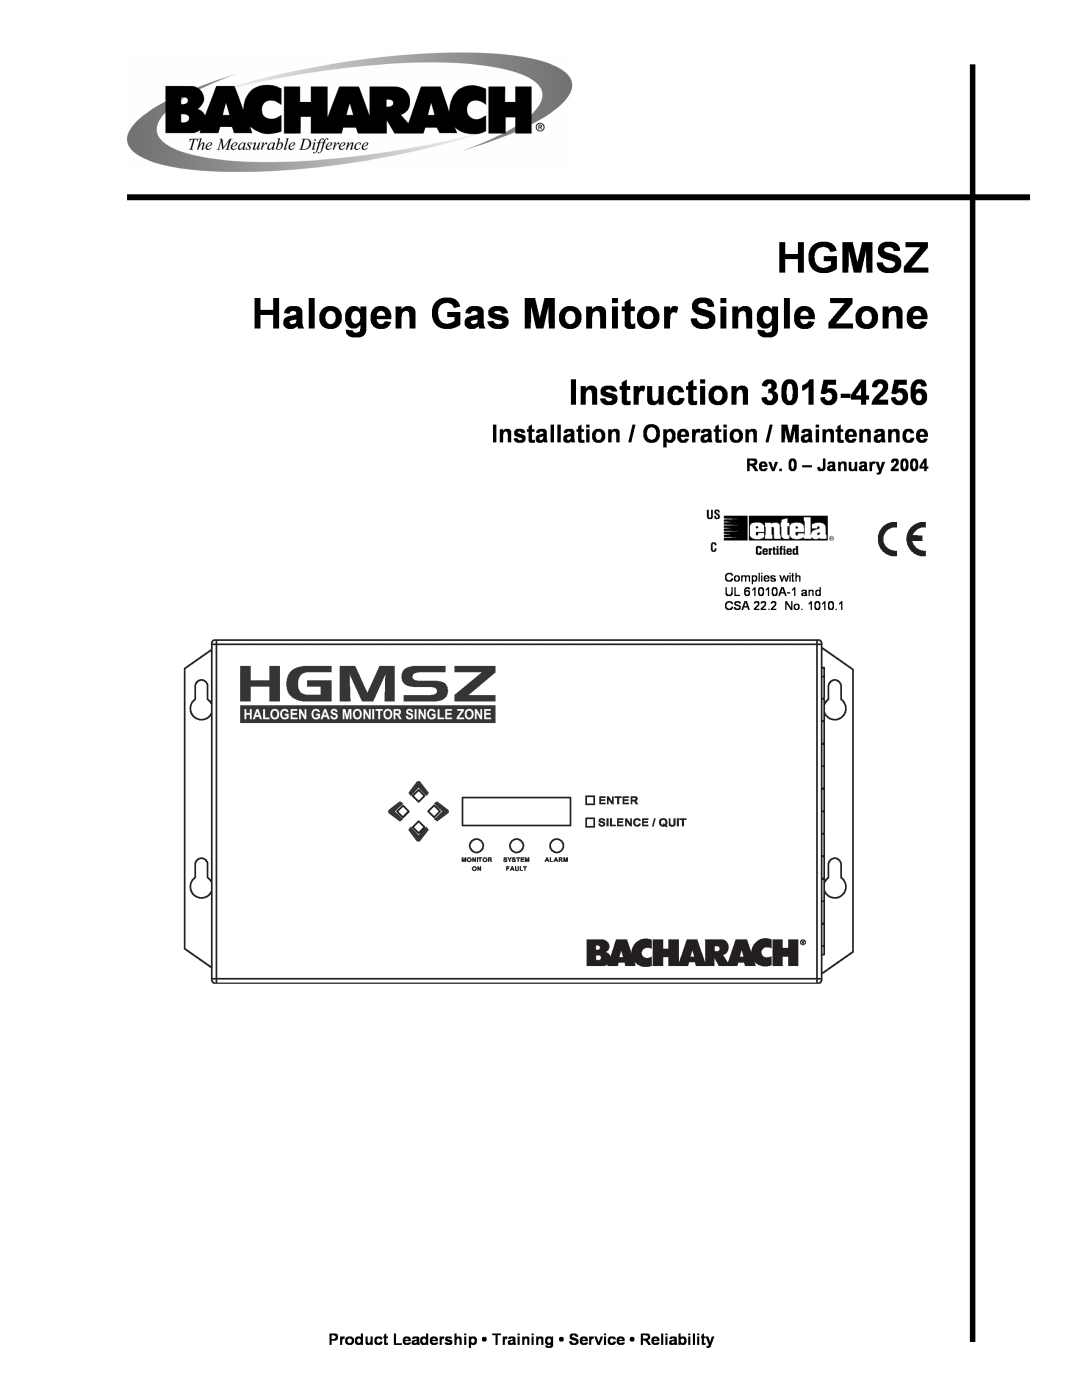 Bacharach 3015-4256 manual Hgmsz, HGMSZ Halogen Gas Monitor Single Zone, Instruction, Rev. 0 - January 